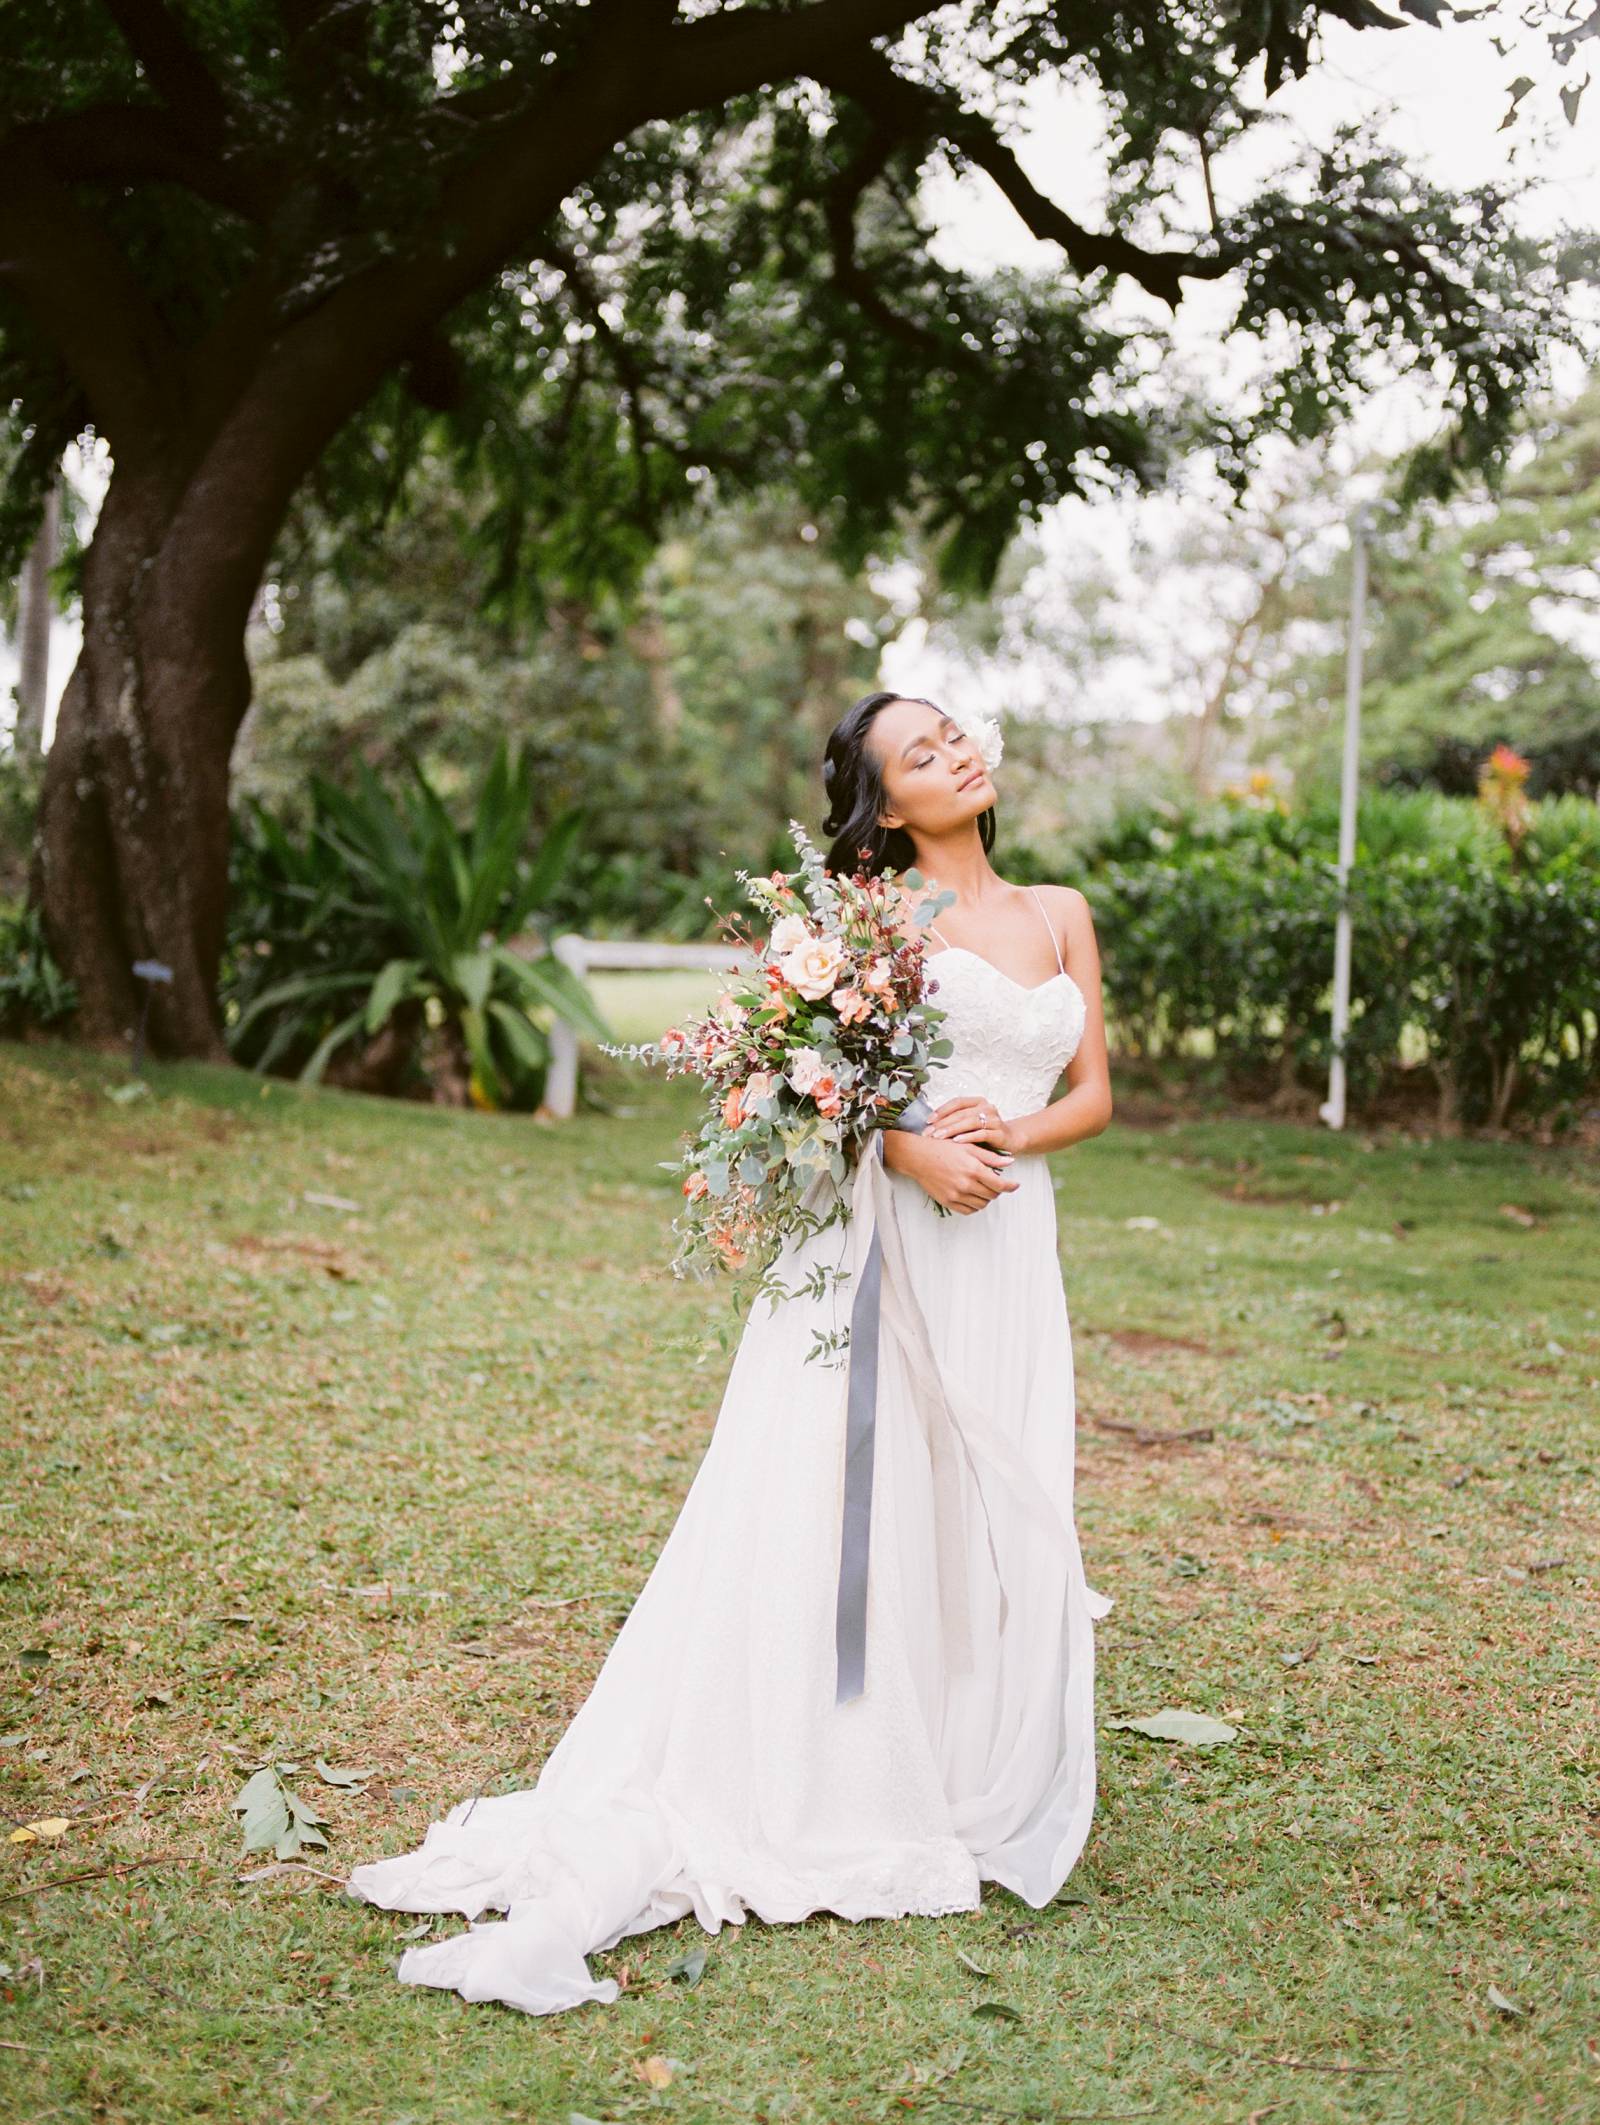 Modern tropical wedding style from Maui | Hawaii Wedding Inspiration